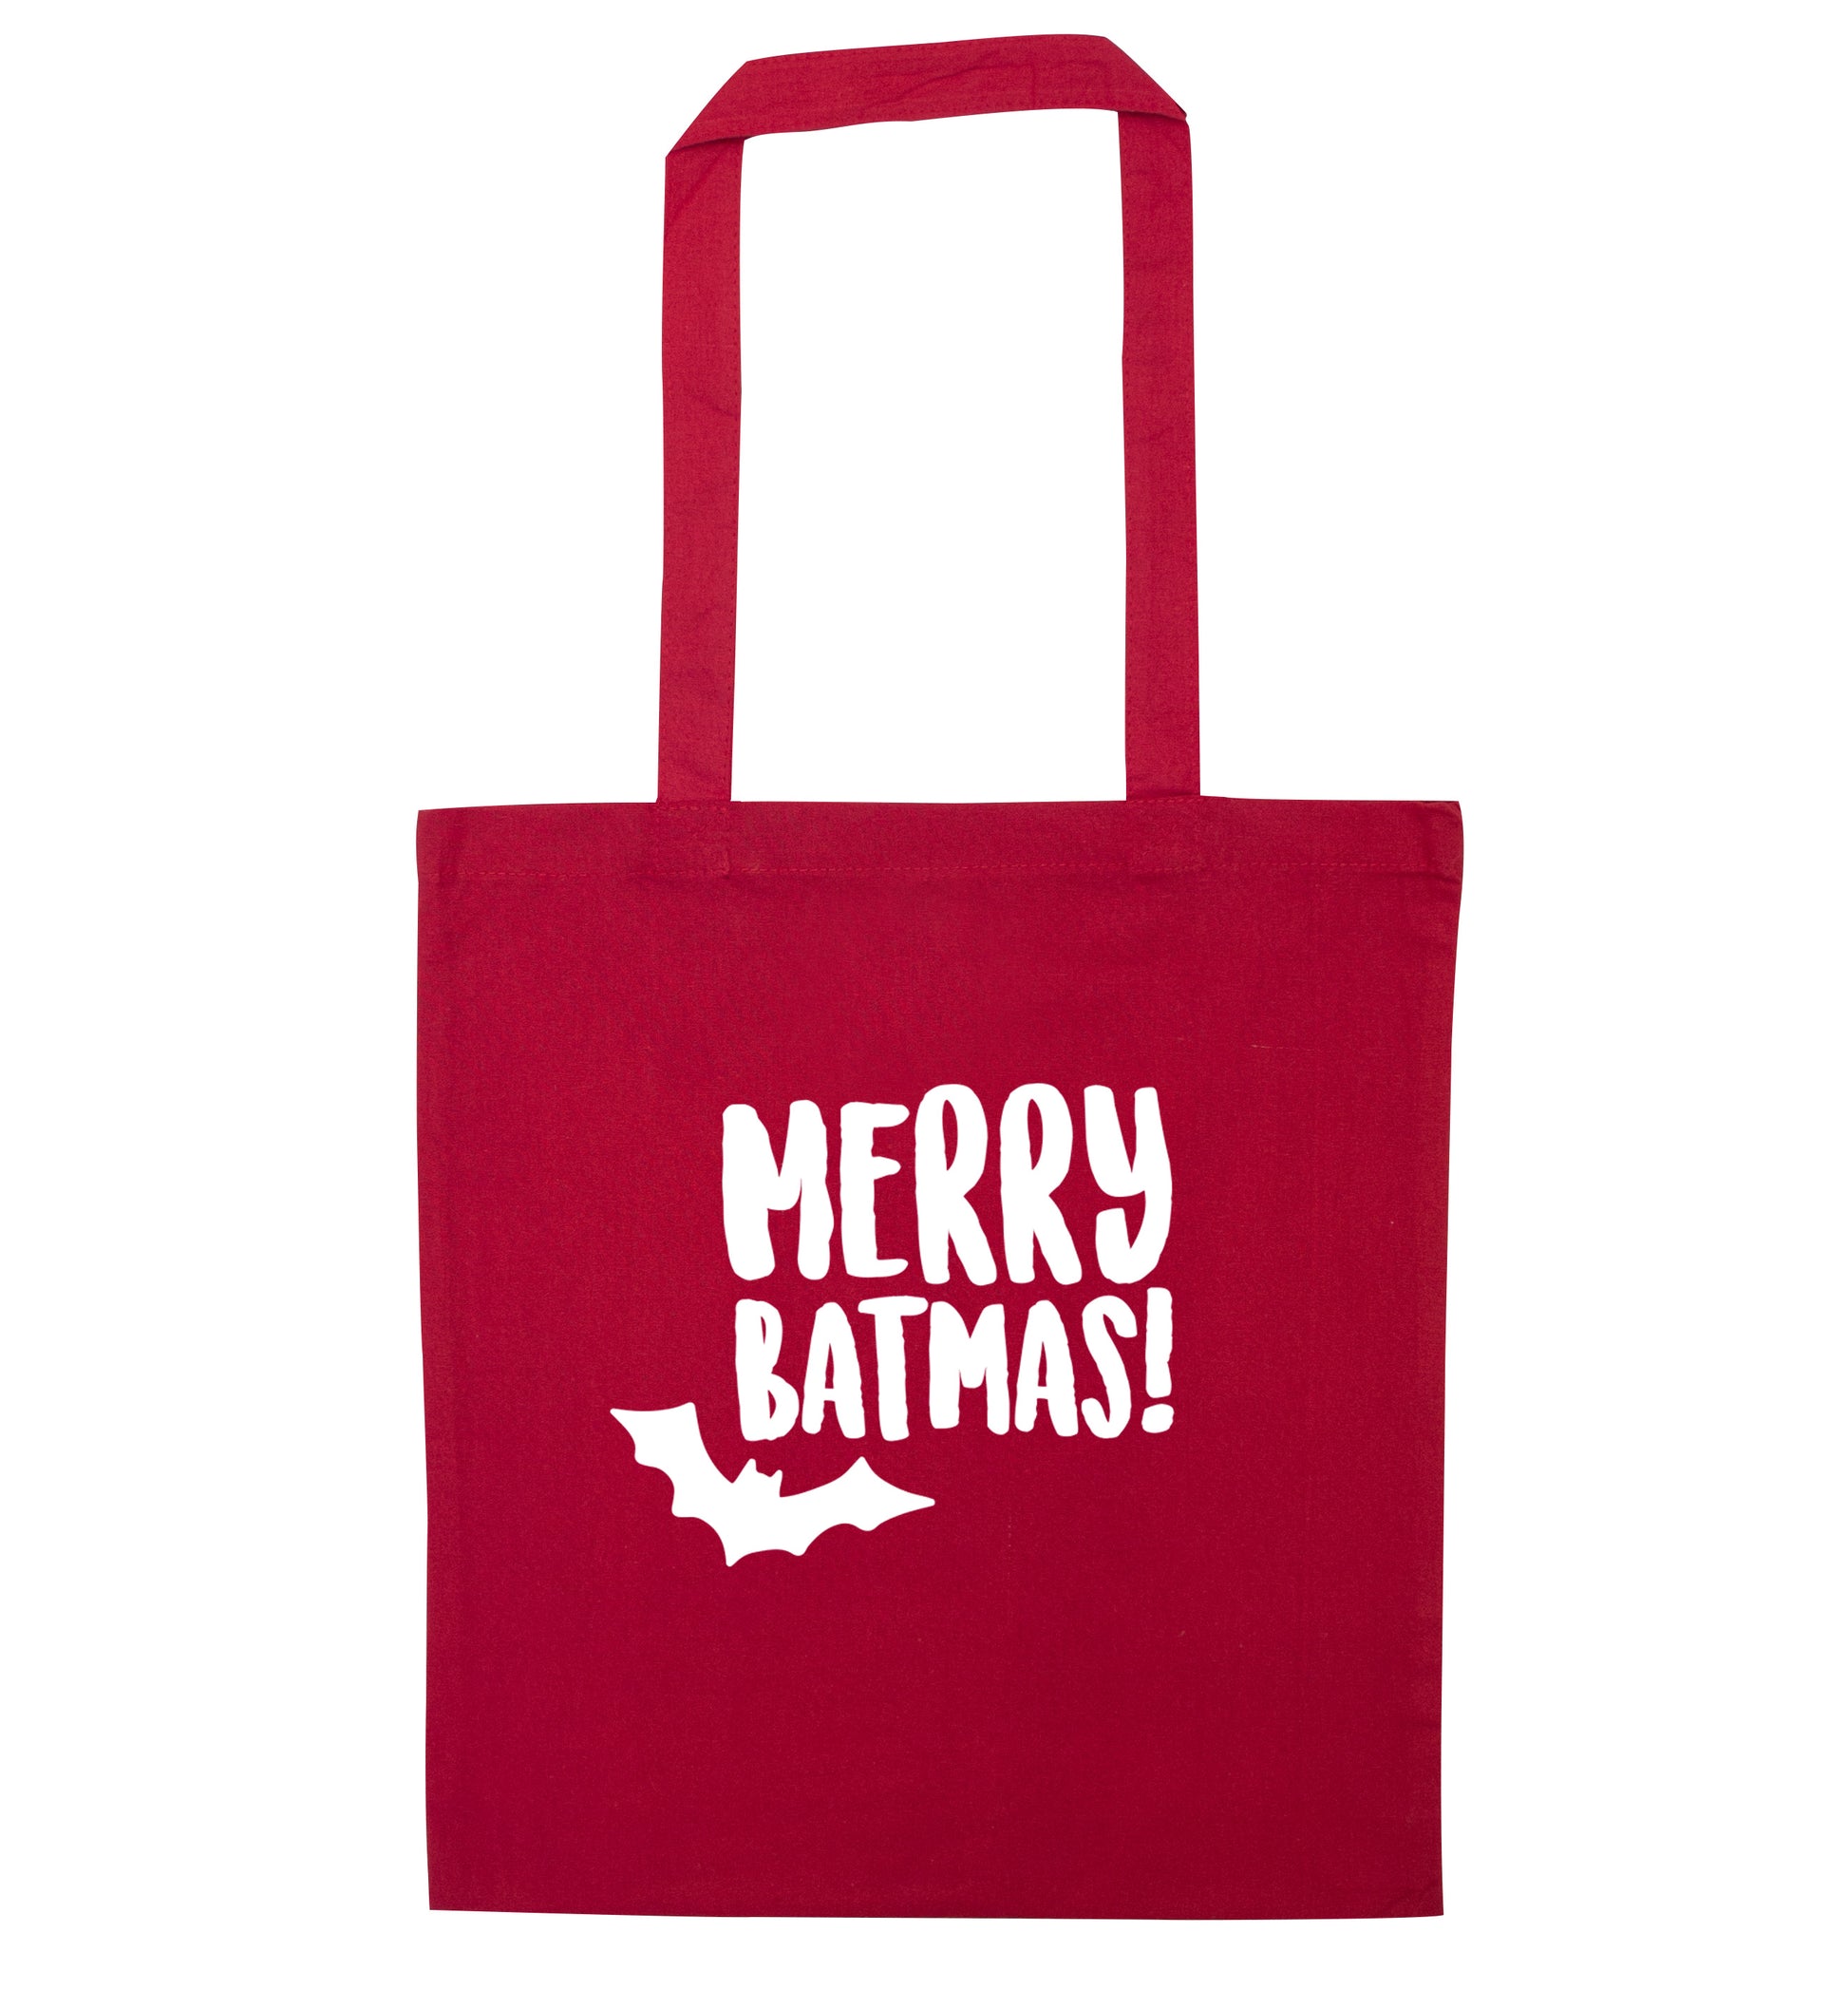 Merry Batmas red tote bag